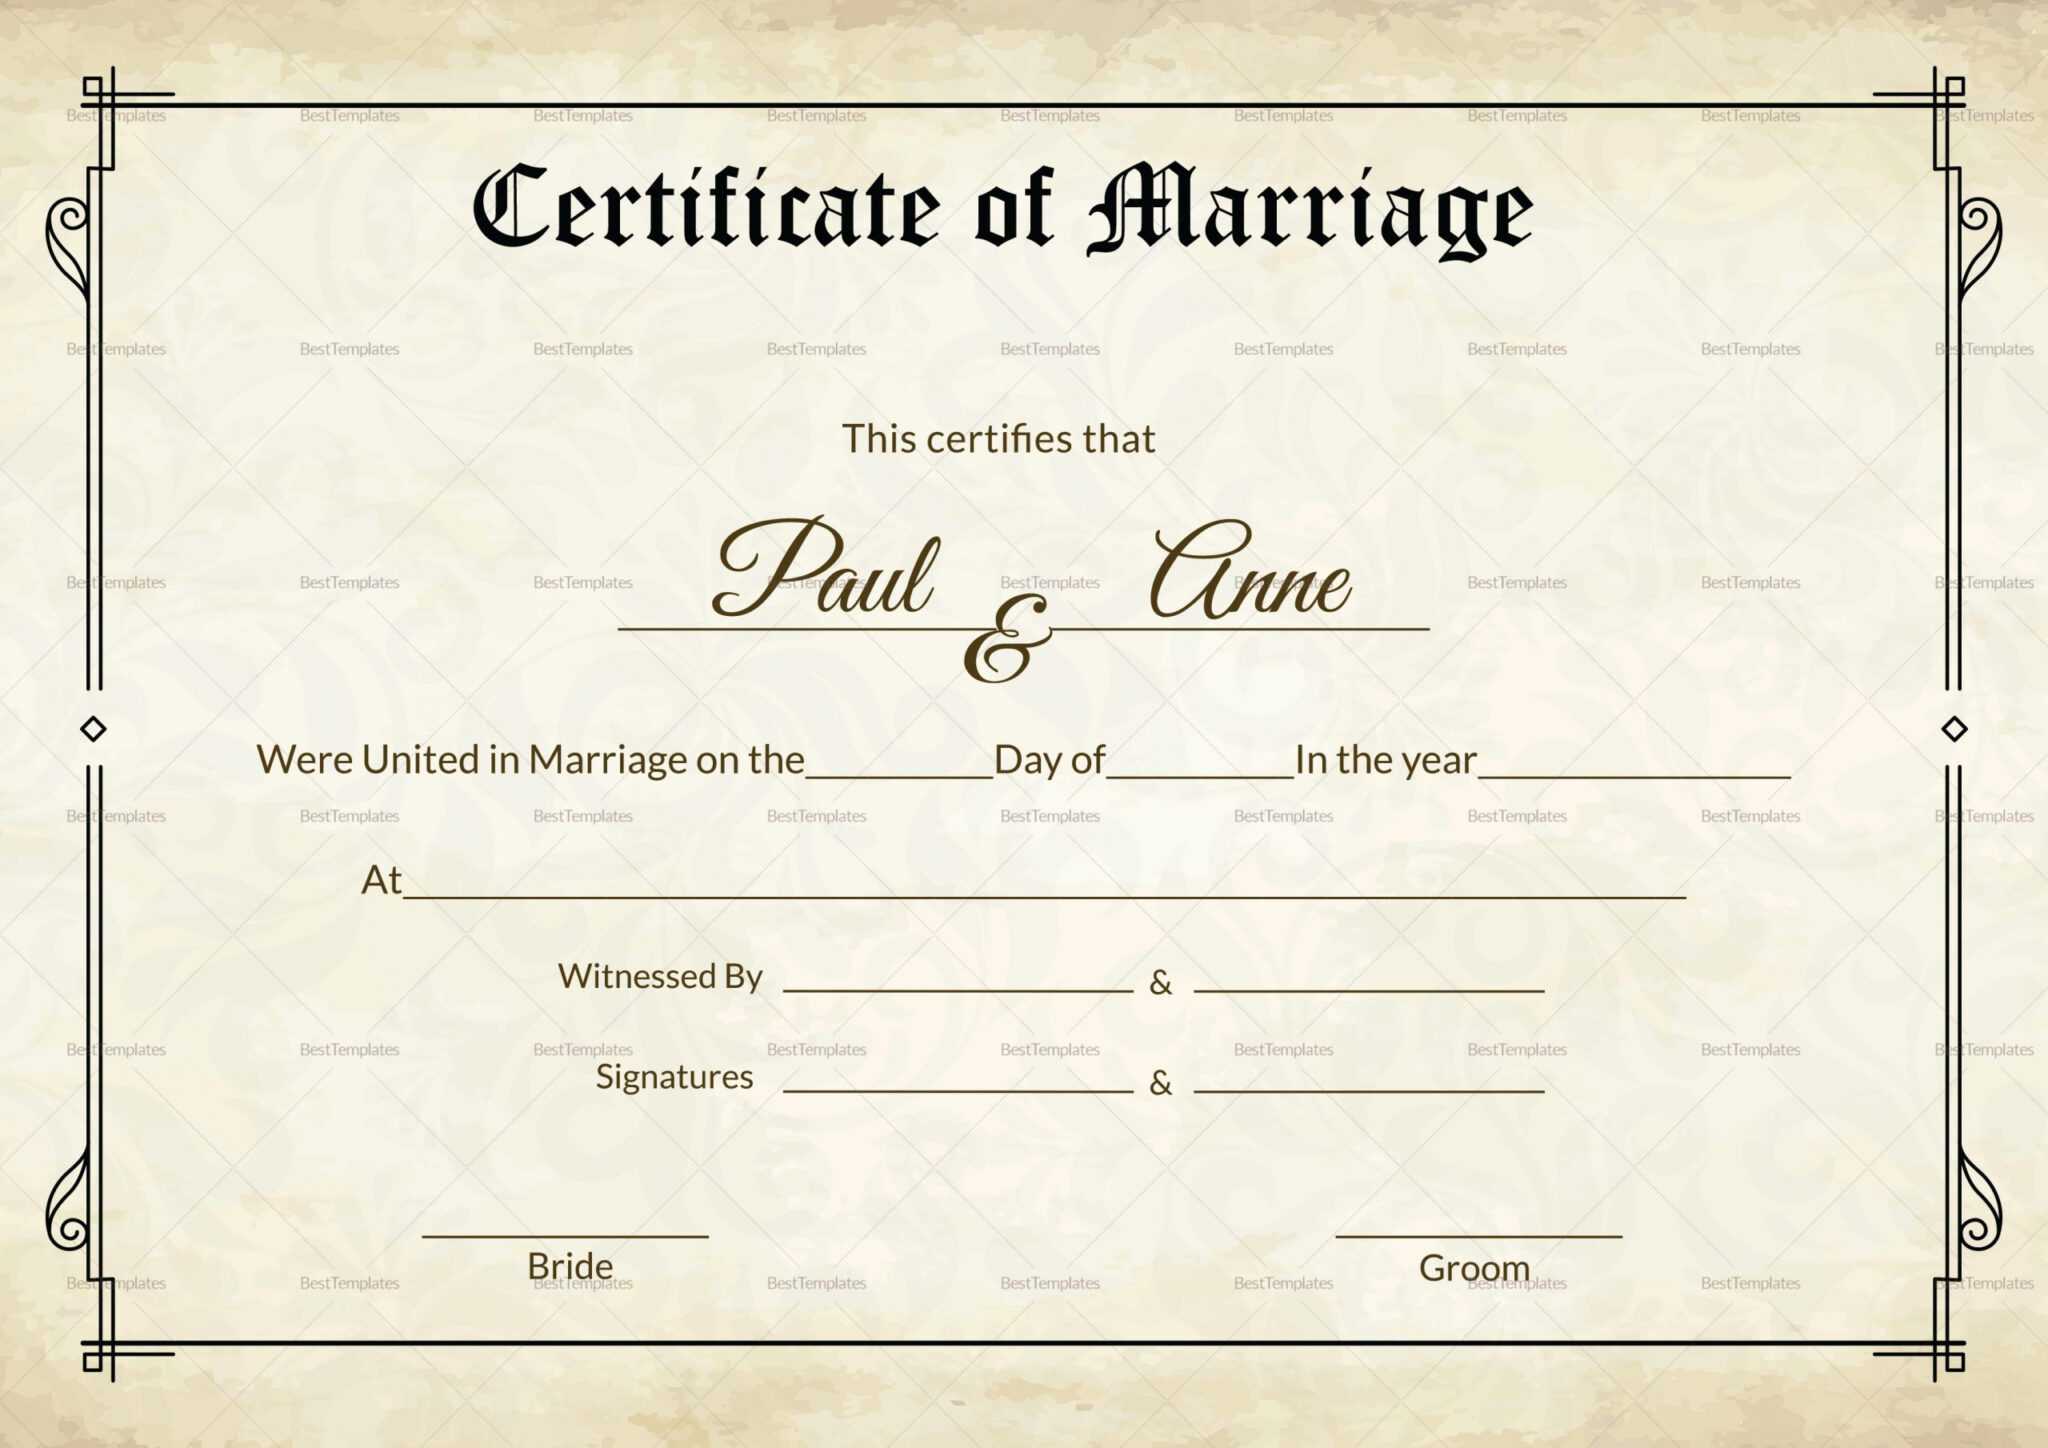 marriage-certificate-template-keepsake-wedding-sample-south-throughout